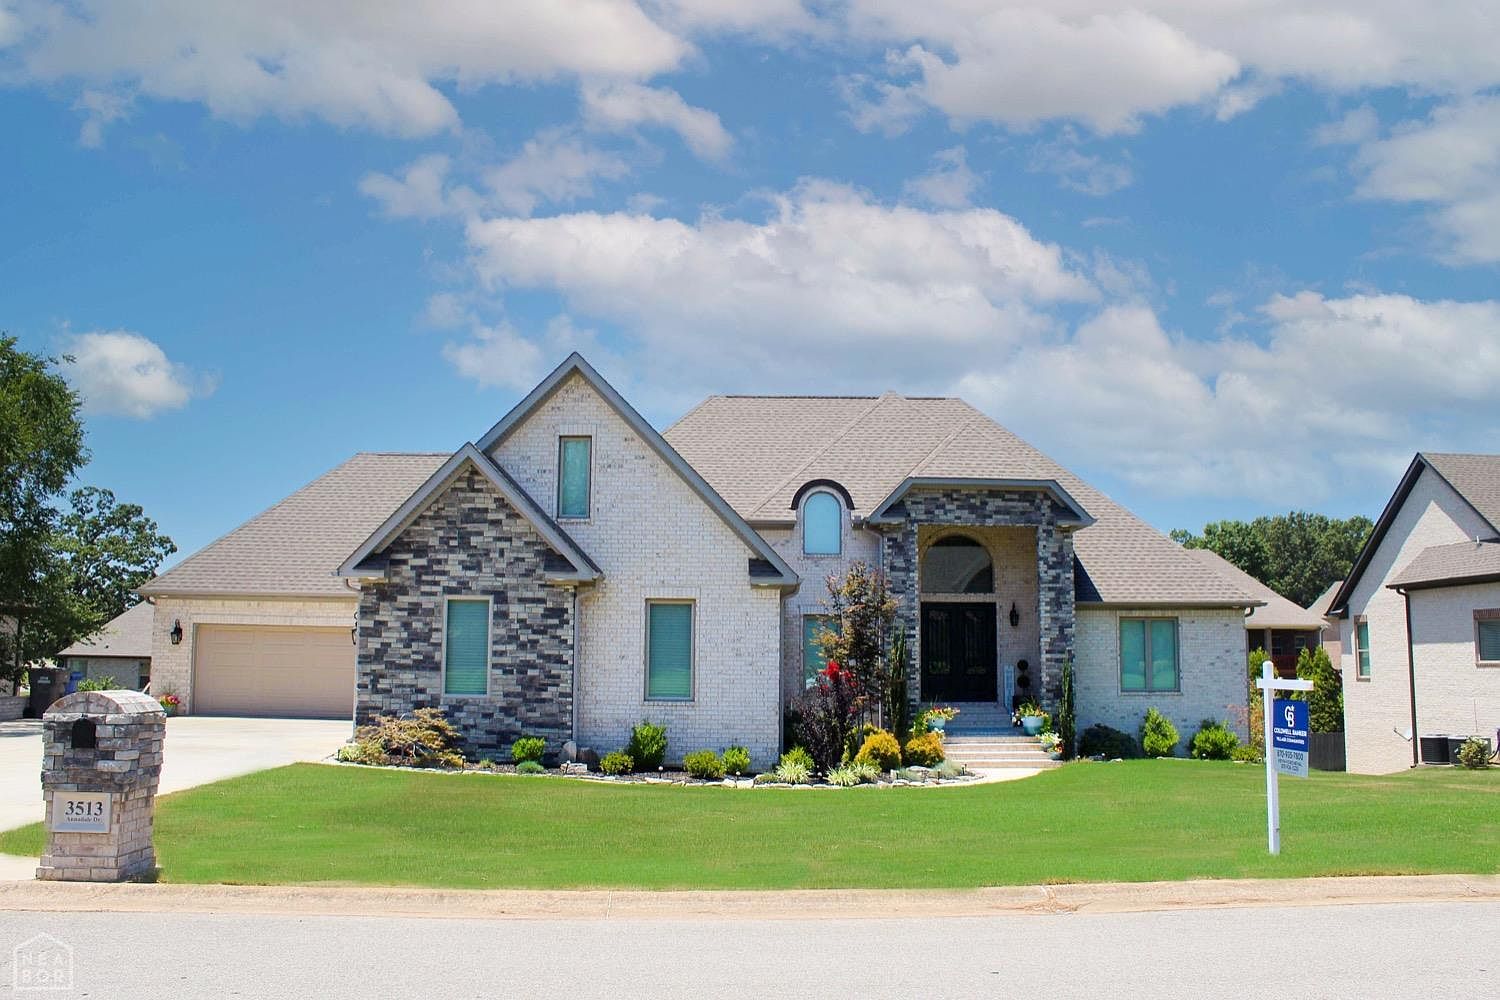 Jonesboro Real Estate - Jonesboro AR Homes For Sale | Zillow